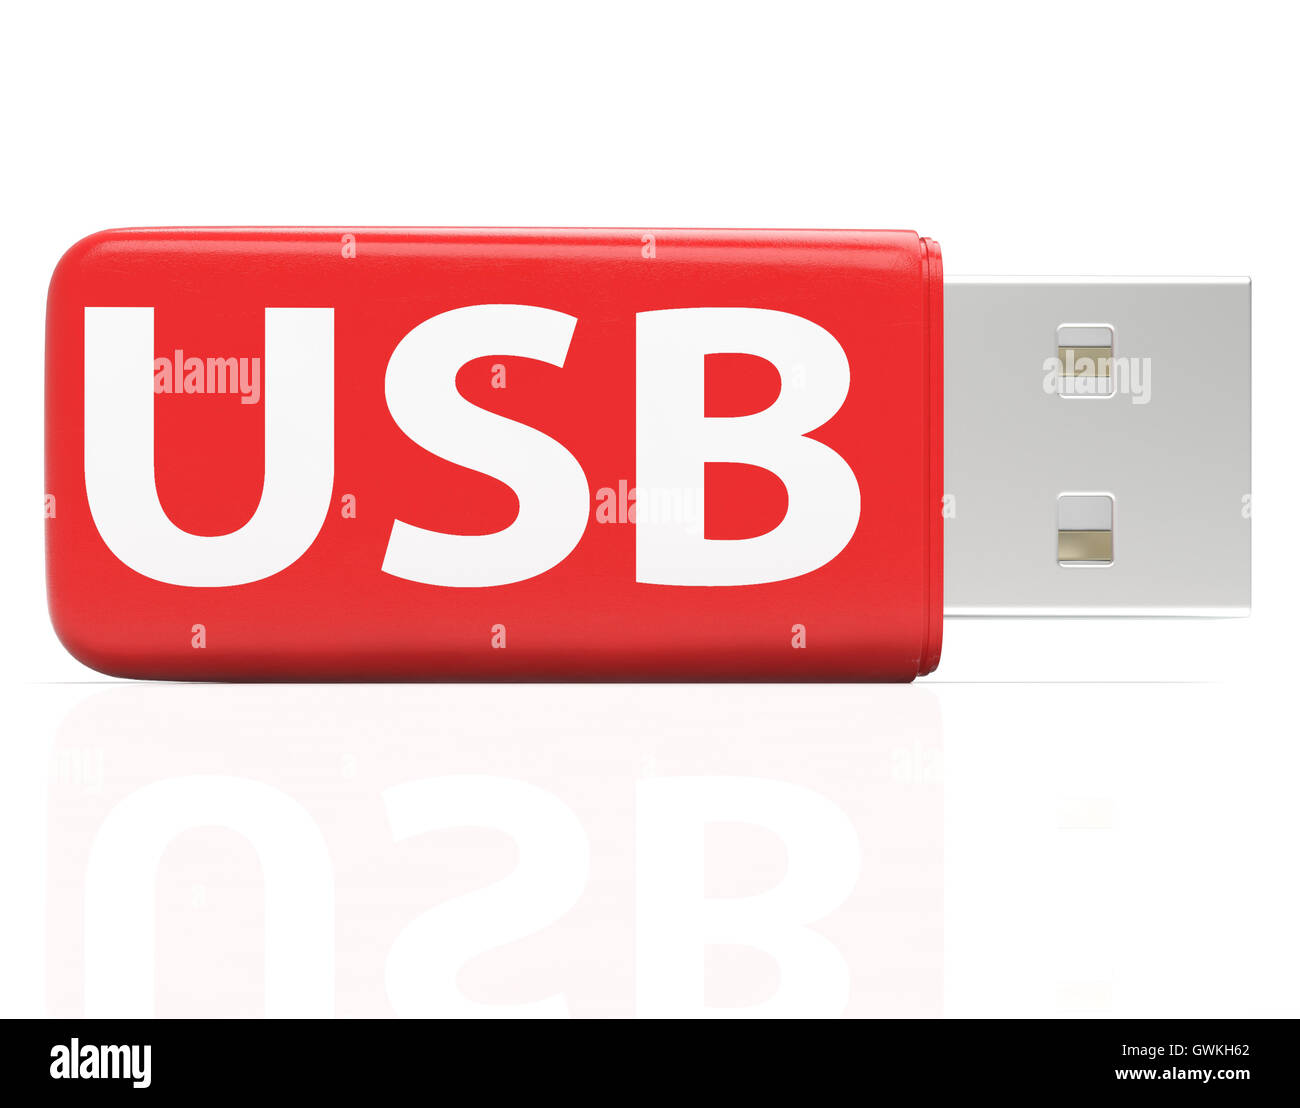 Usb Flash Stick Shows Portable Storage or Memory Stock Photo